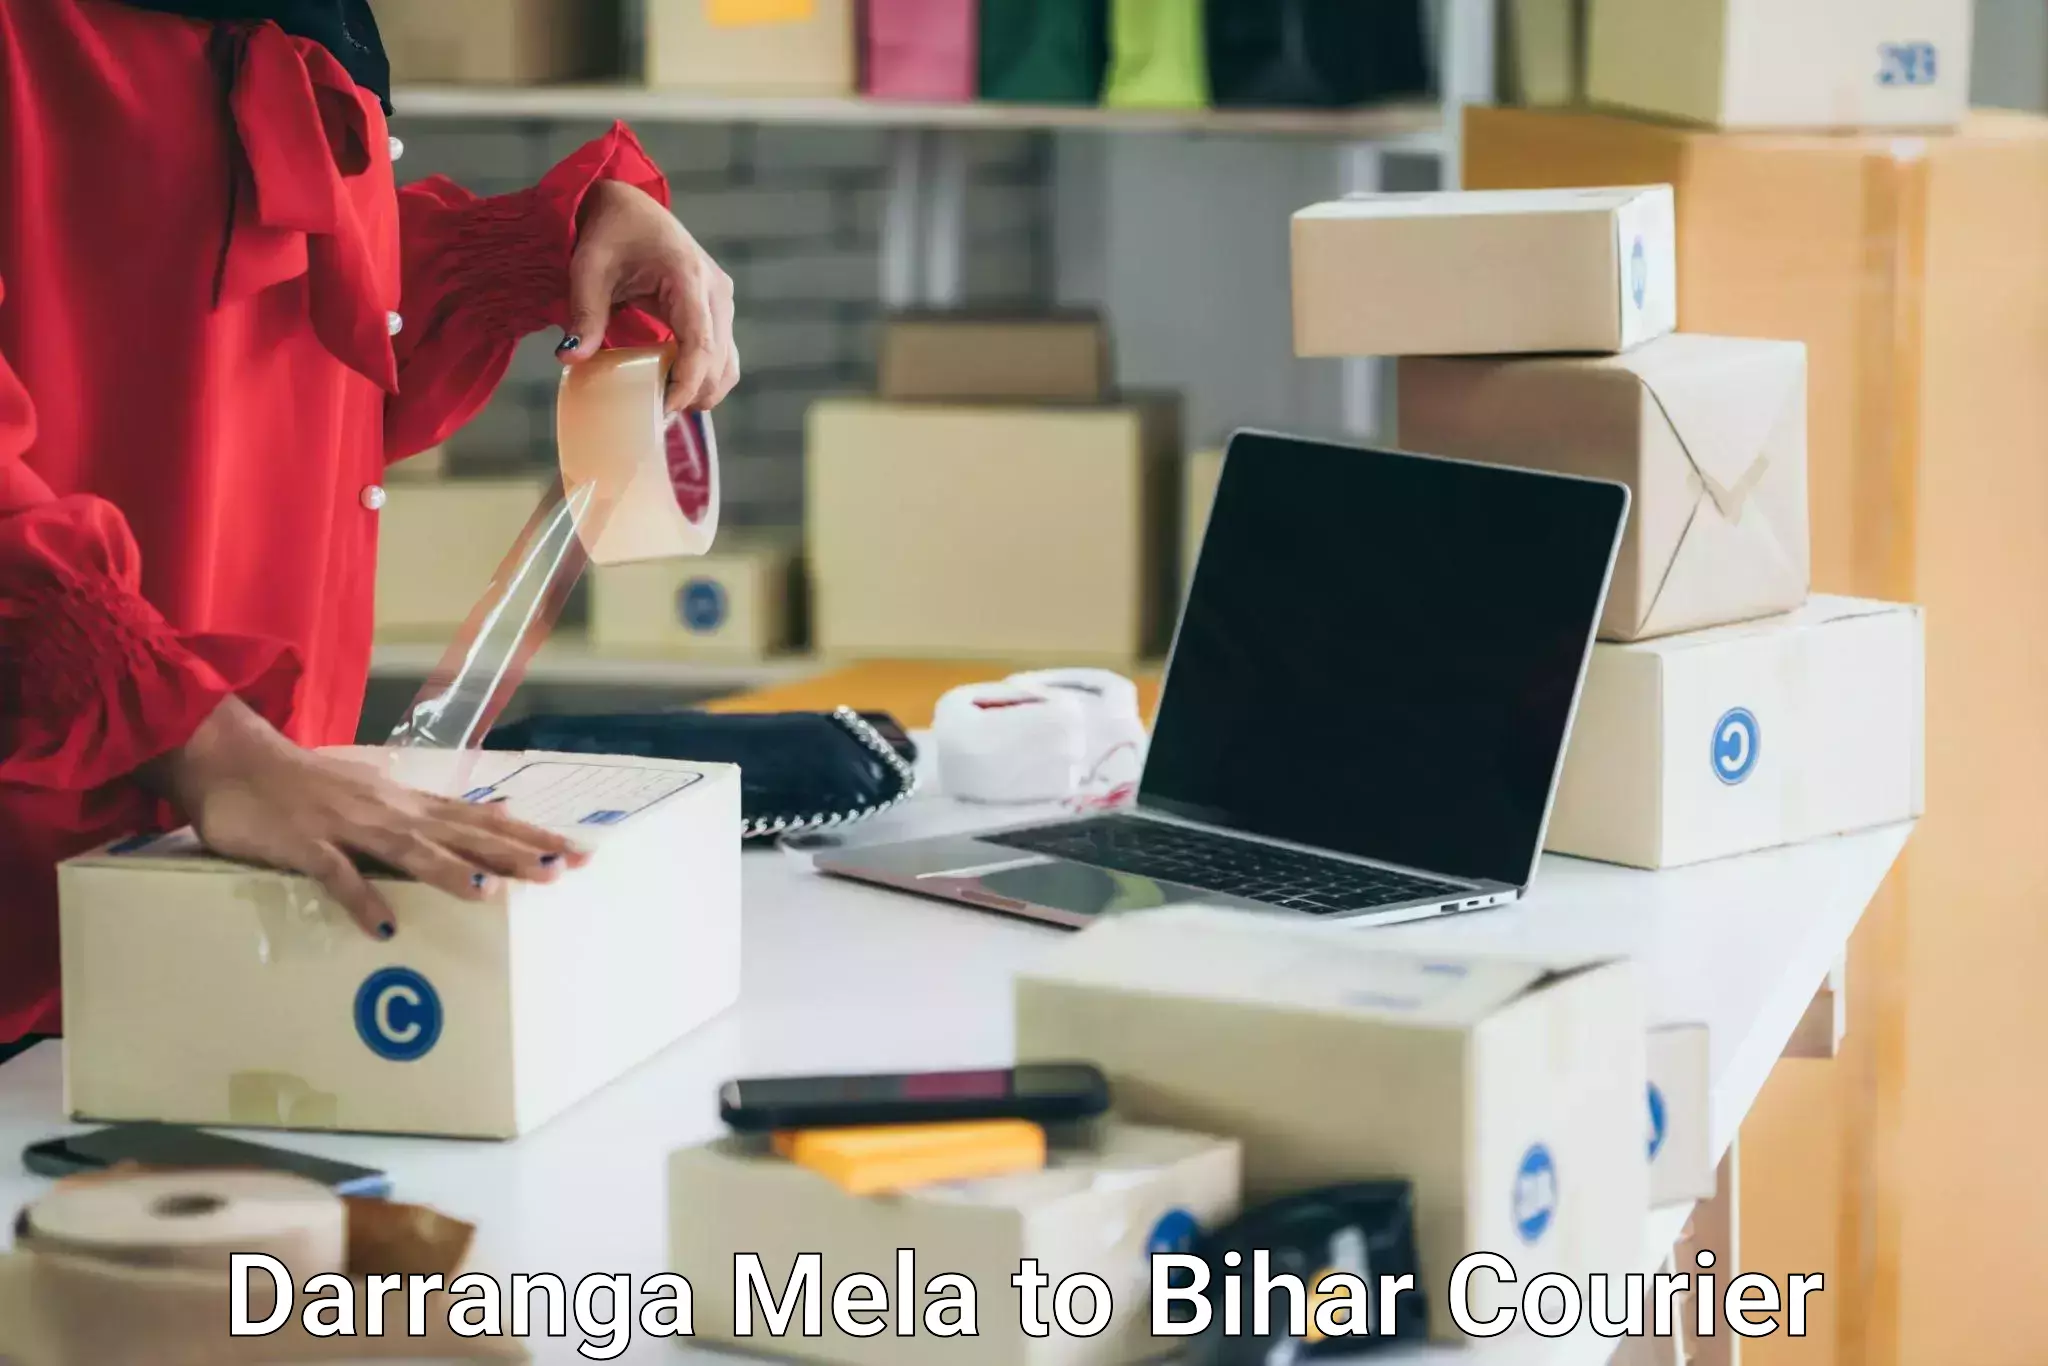 Furniture transport service Darranga Mela to Bihar